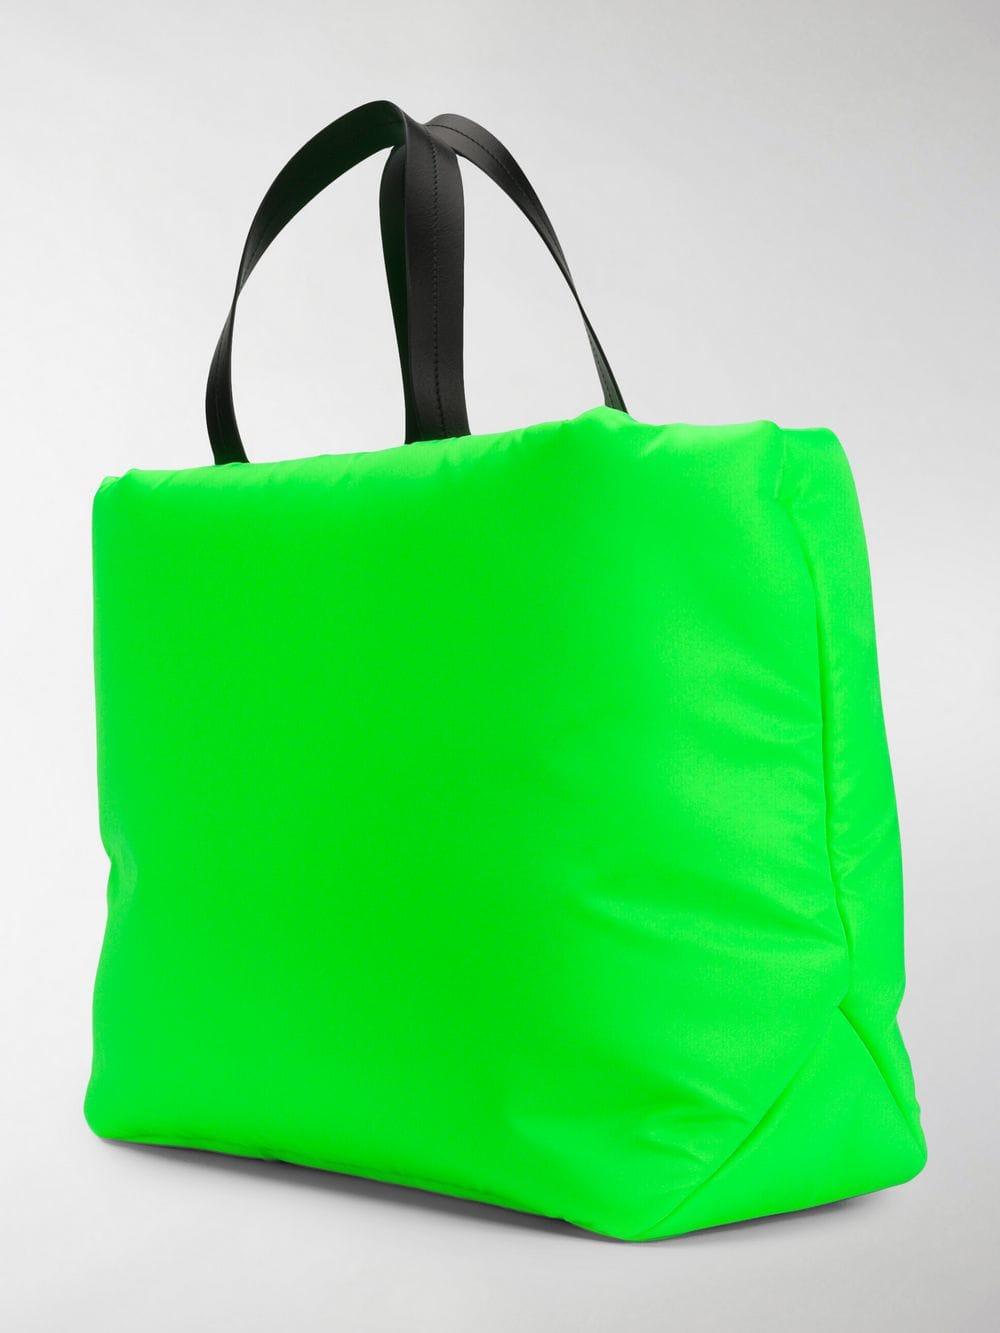 Prada Neon Green Padded Tote Bag - Lyst